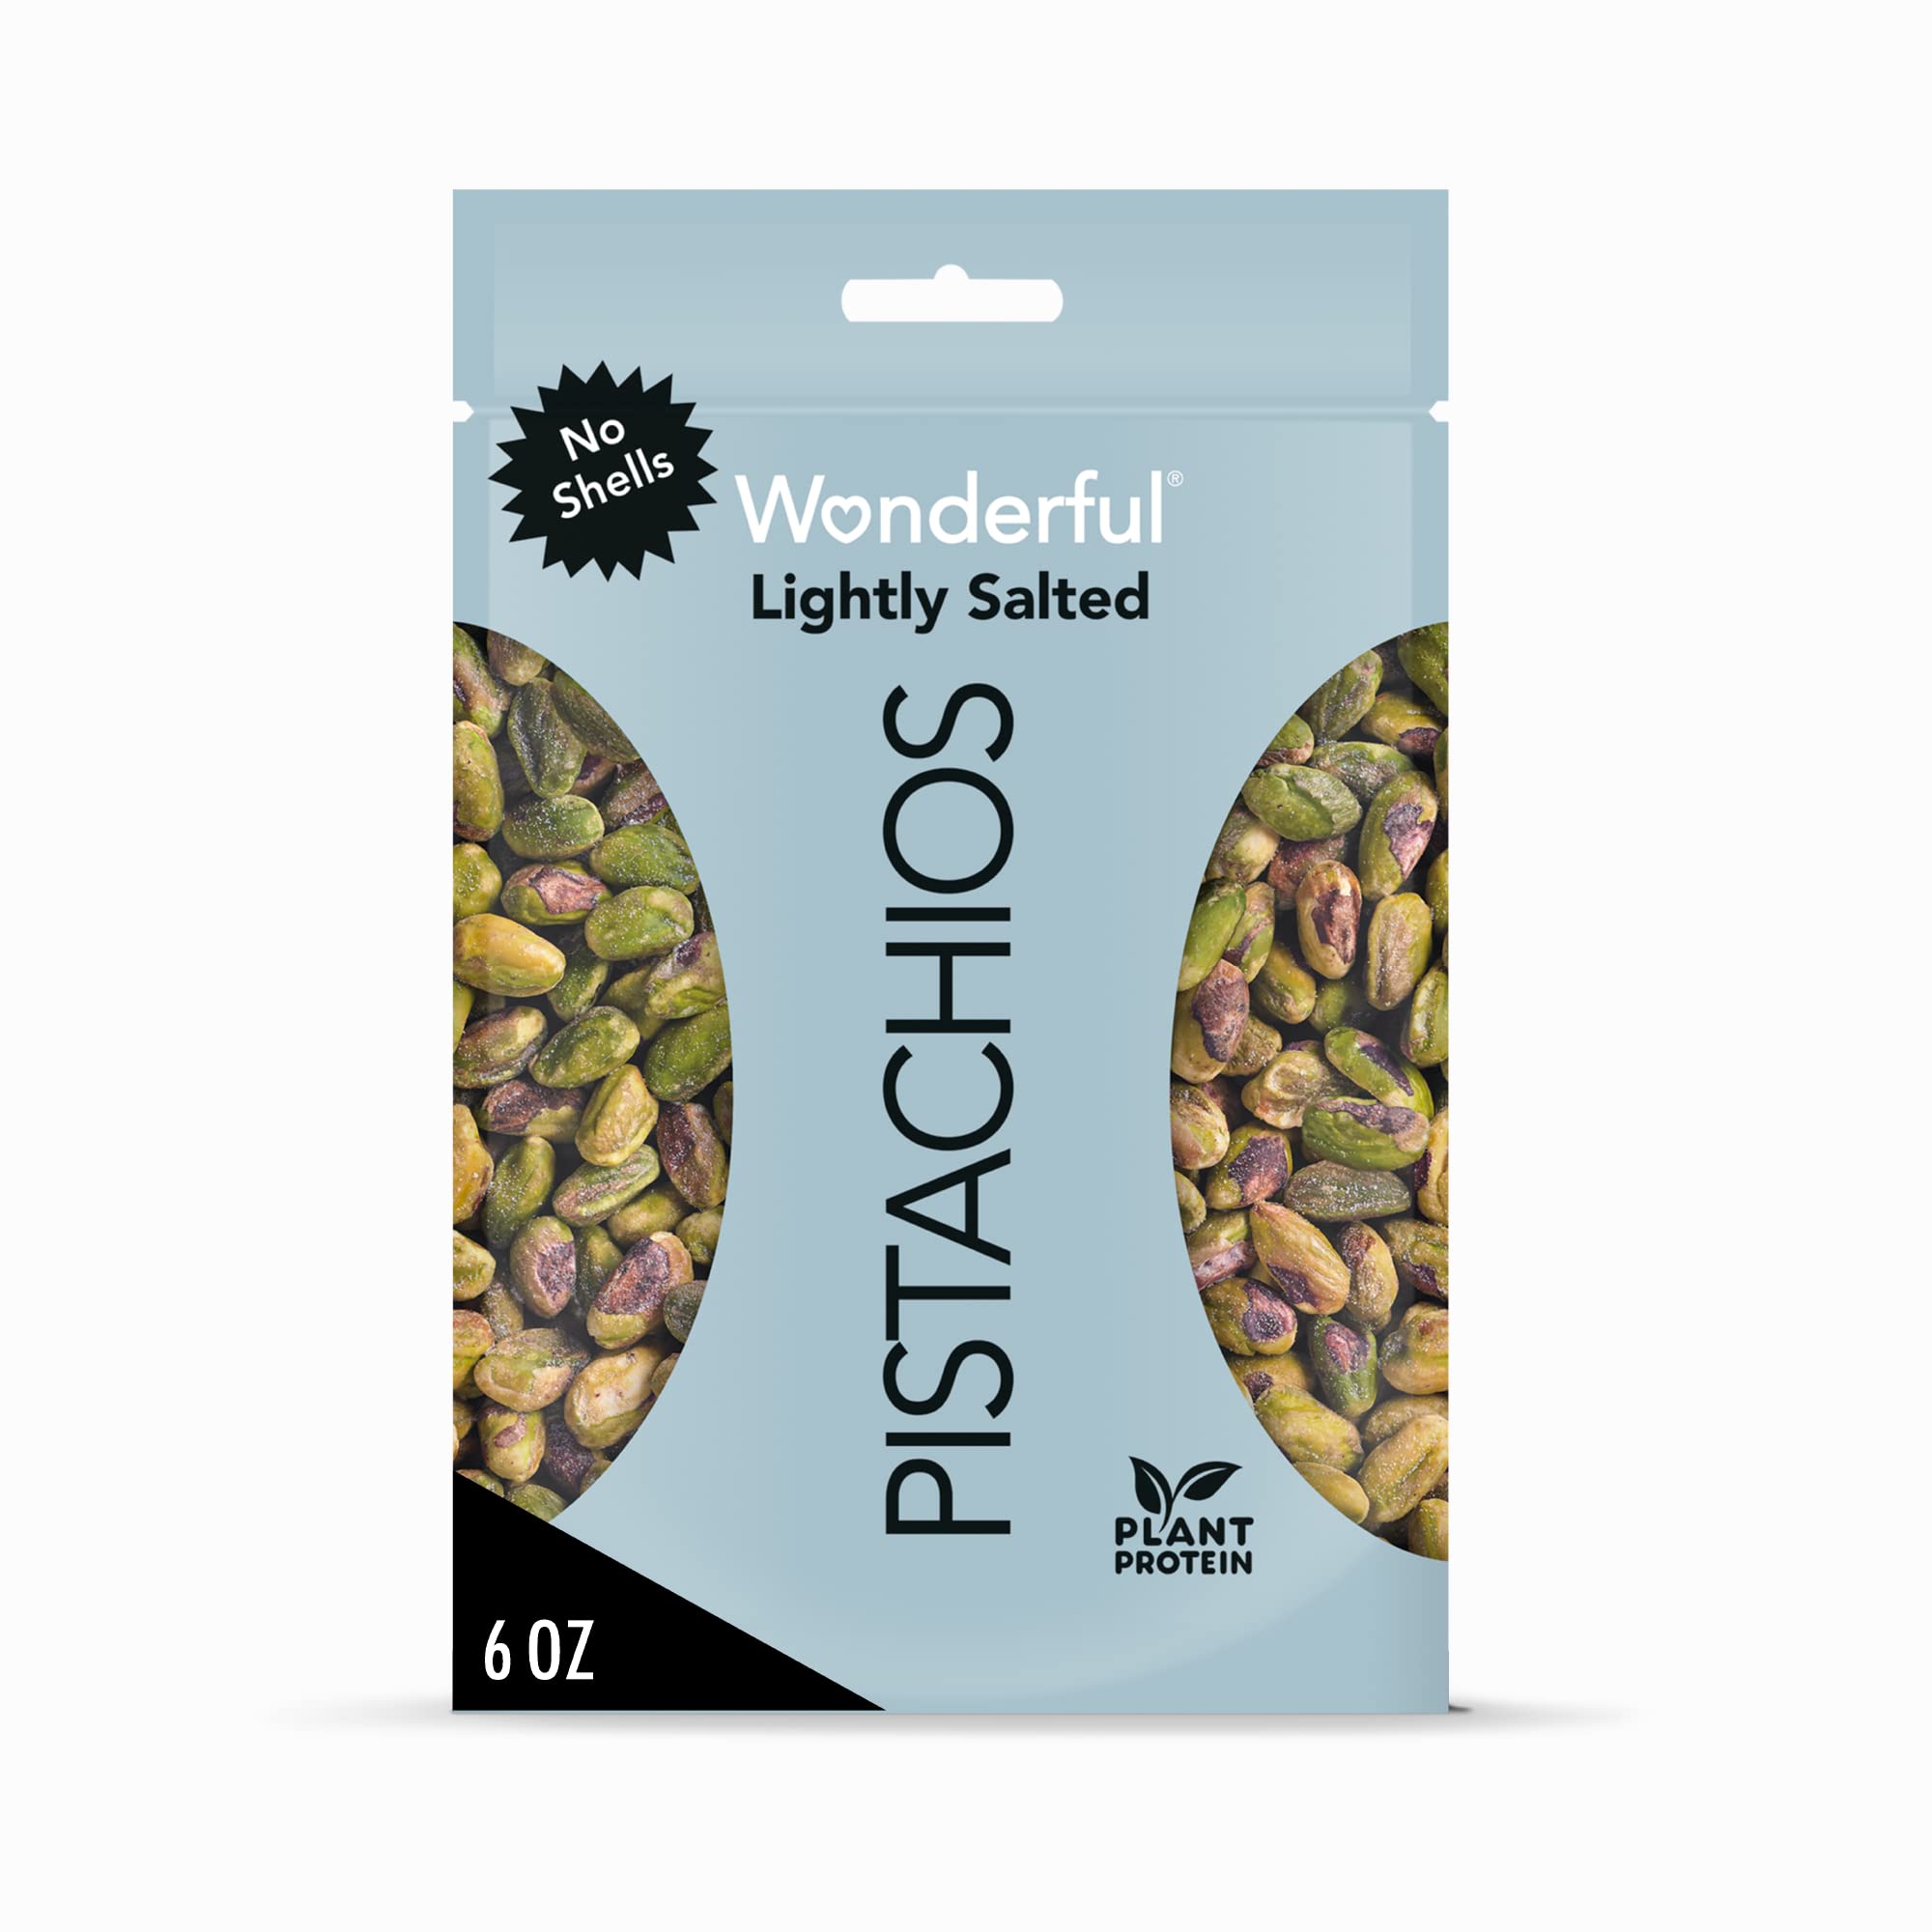 5.5-Oz Wonderful No Shells Pistachios (Sea Salt & Vinegar) $3.70 & More w/ Subscribe & Save